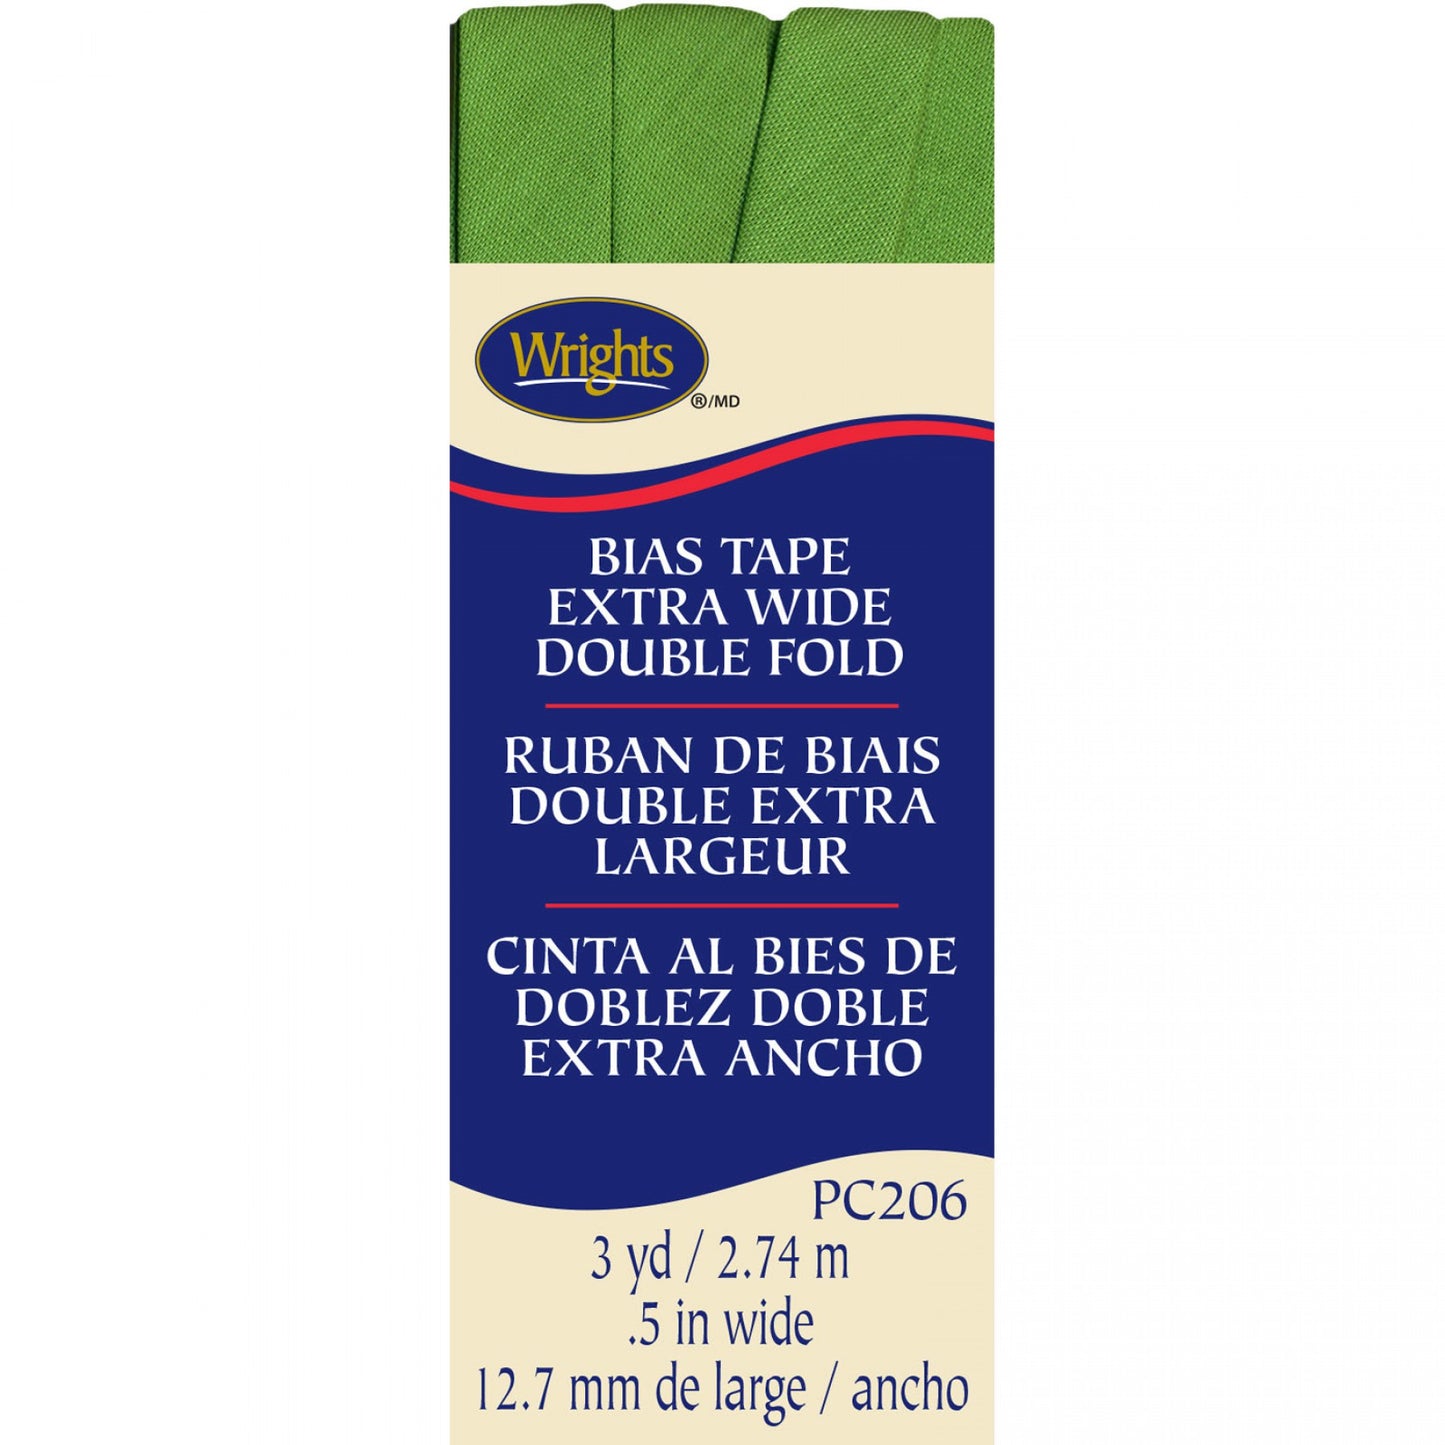 Wrights Bias Tape Extra Wide Double Fold 13mm x 2.75M Kiwi Green #1136